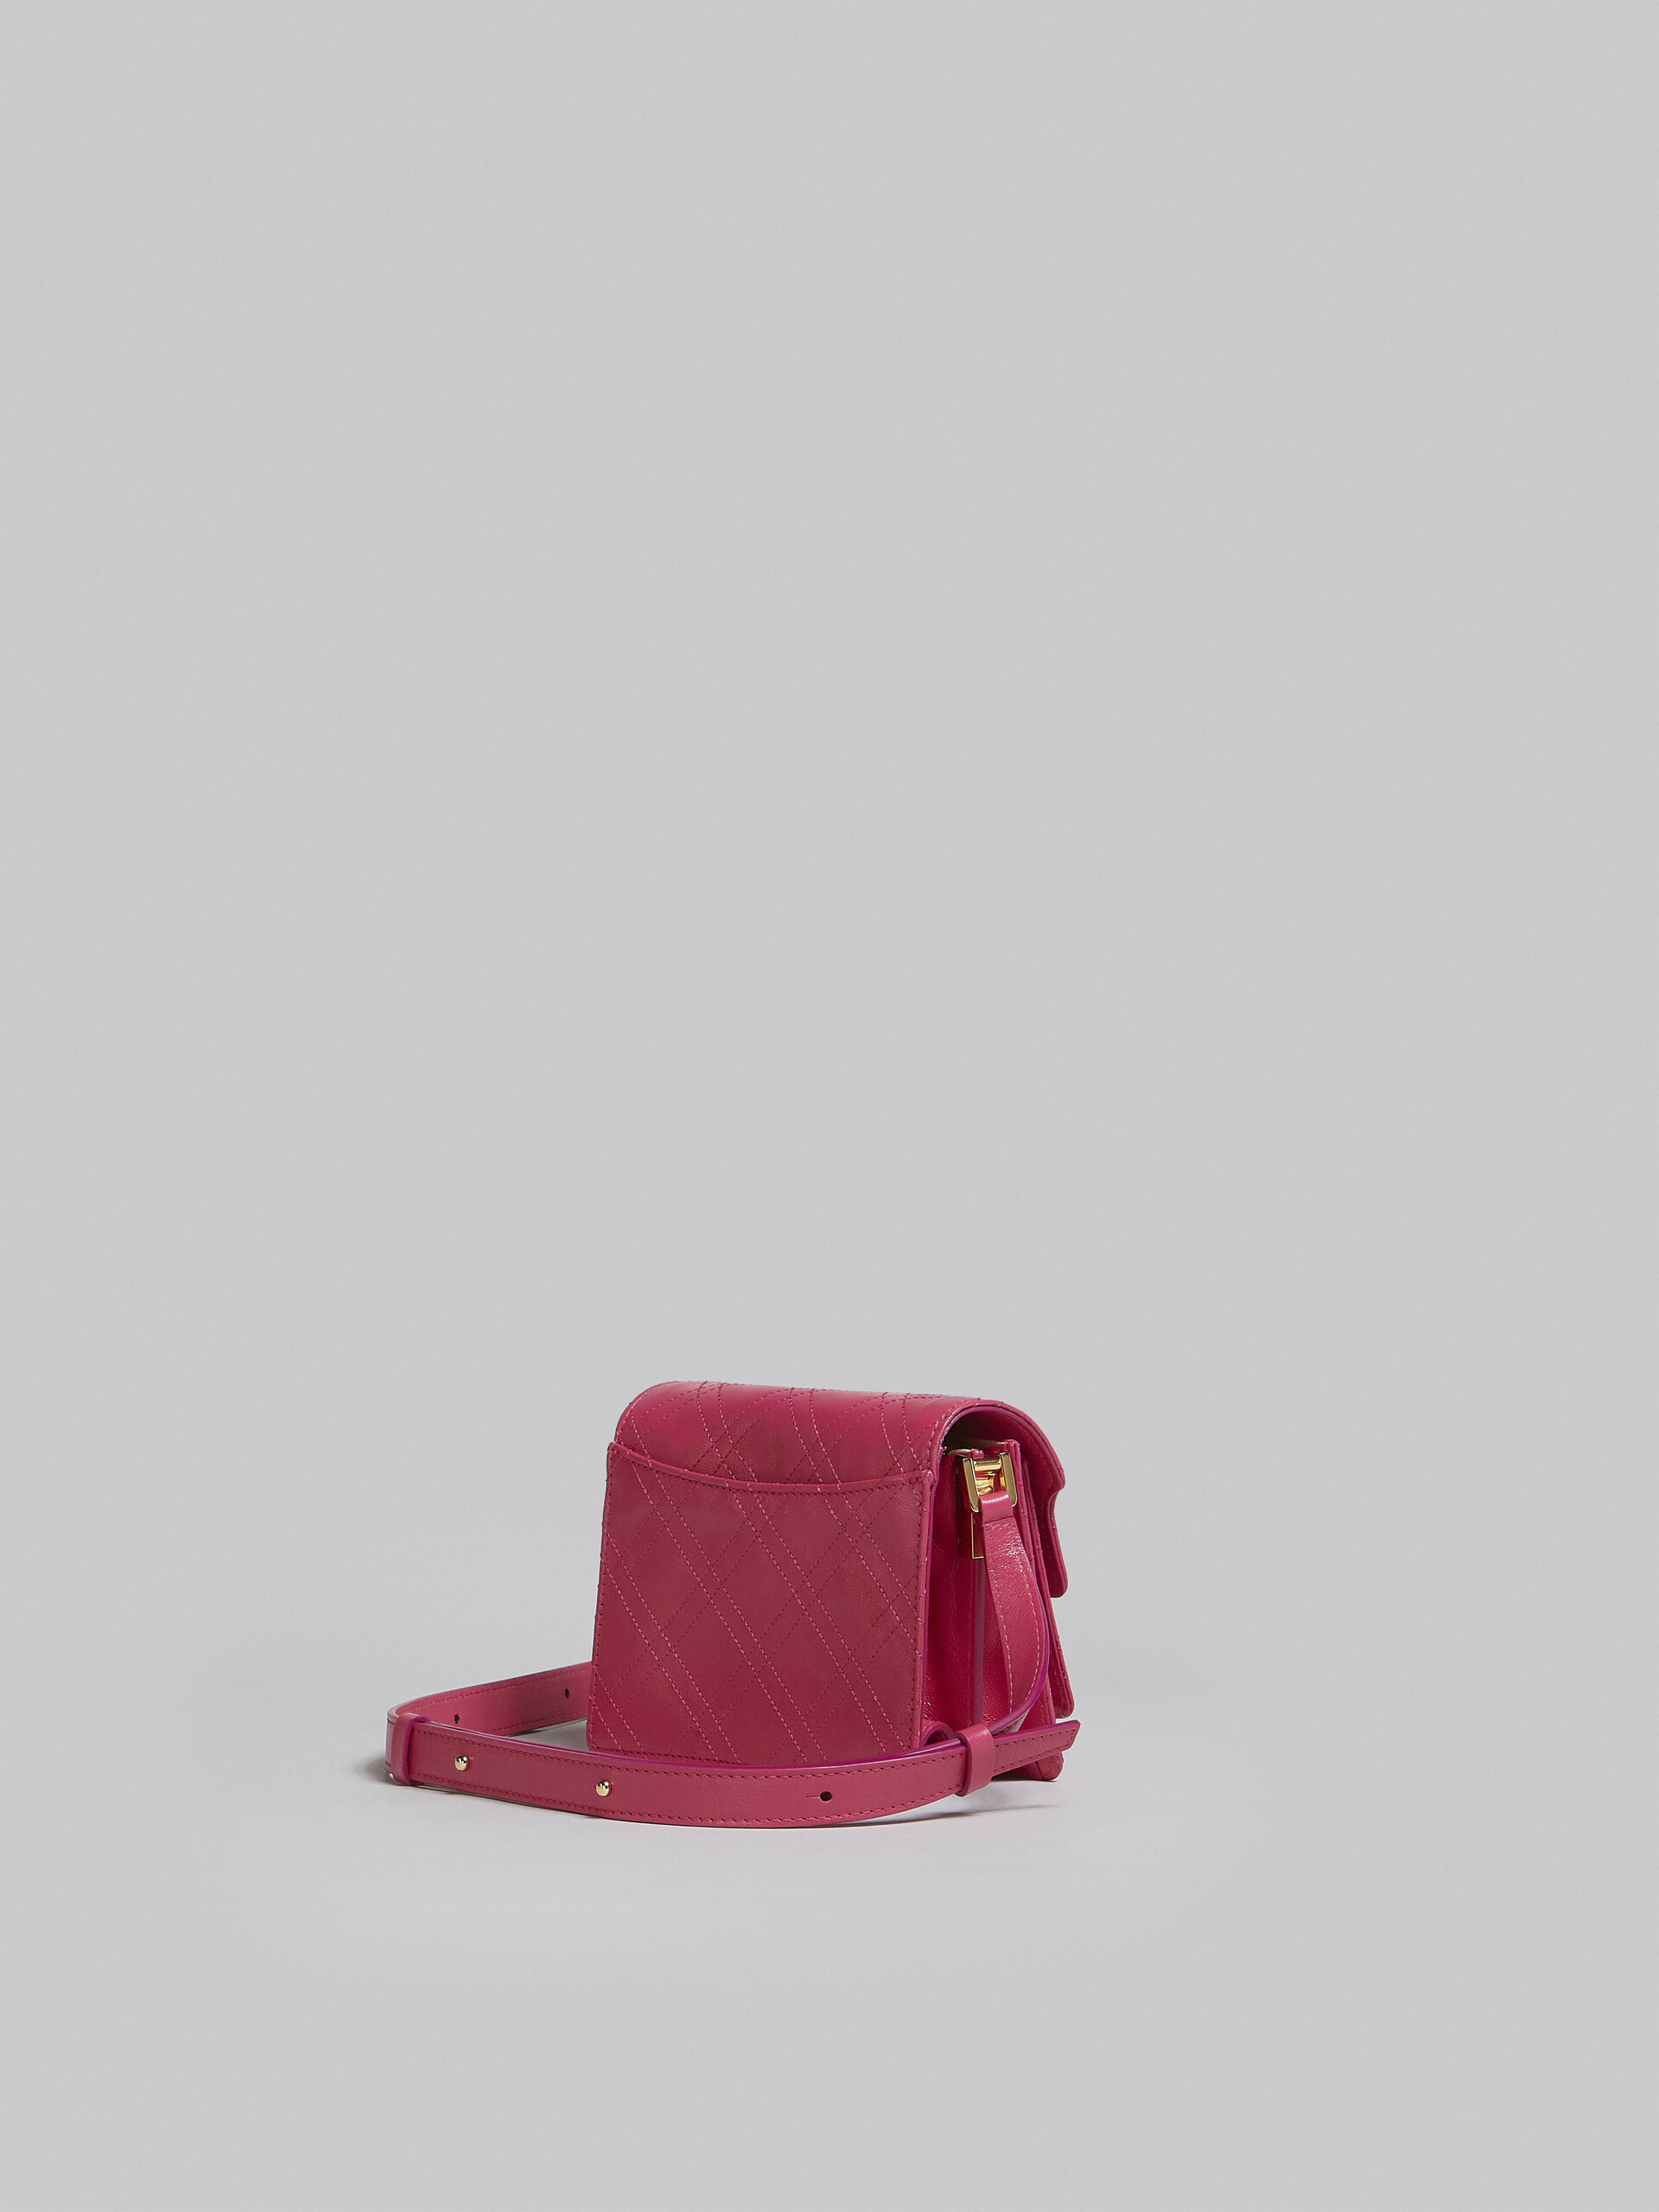 Trunk Soft Mini Bag in fuchsia leather - Shoulder Bag - Image 3